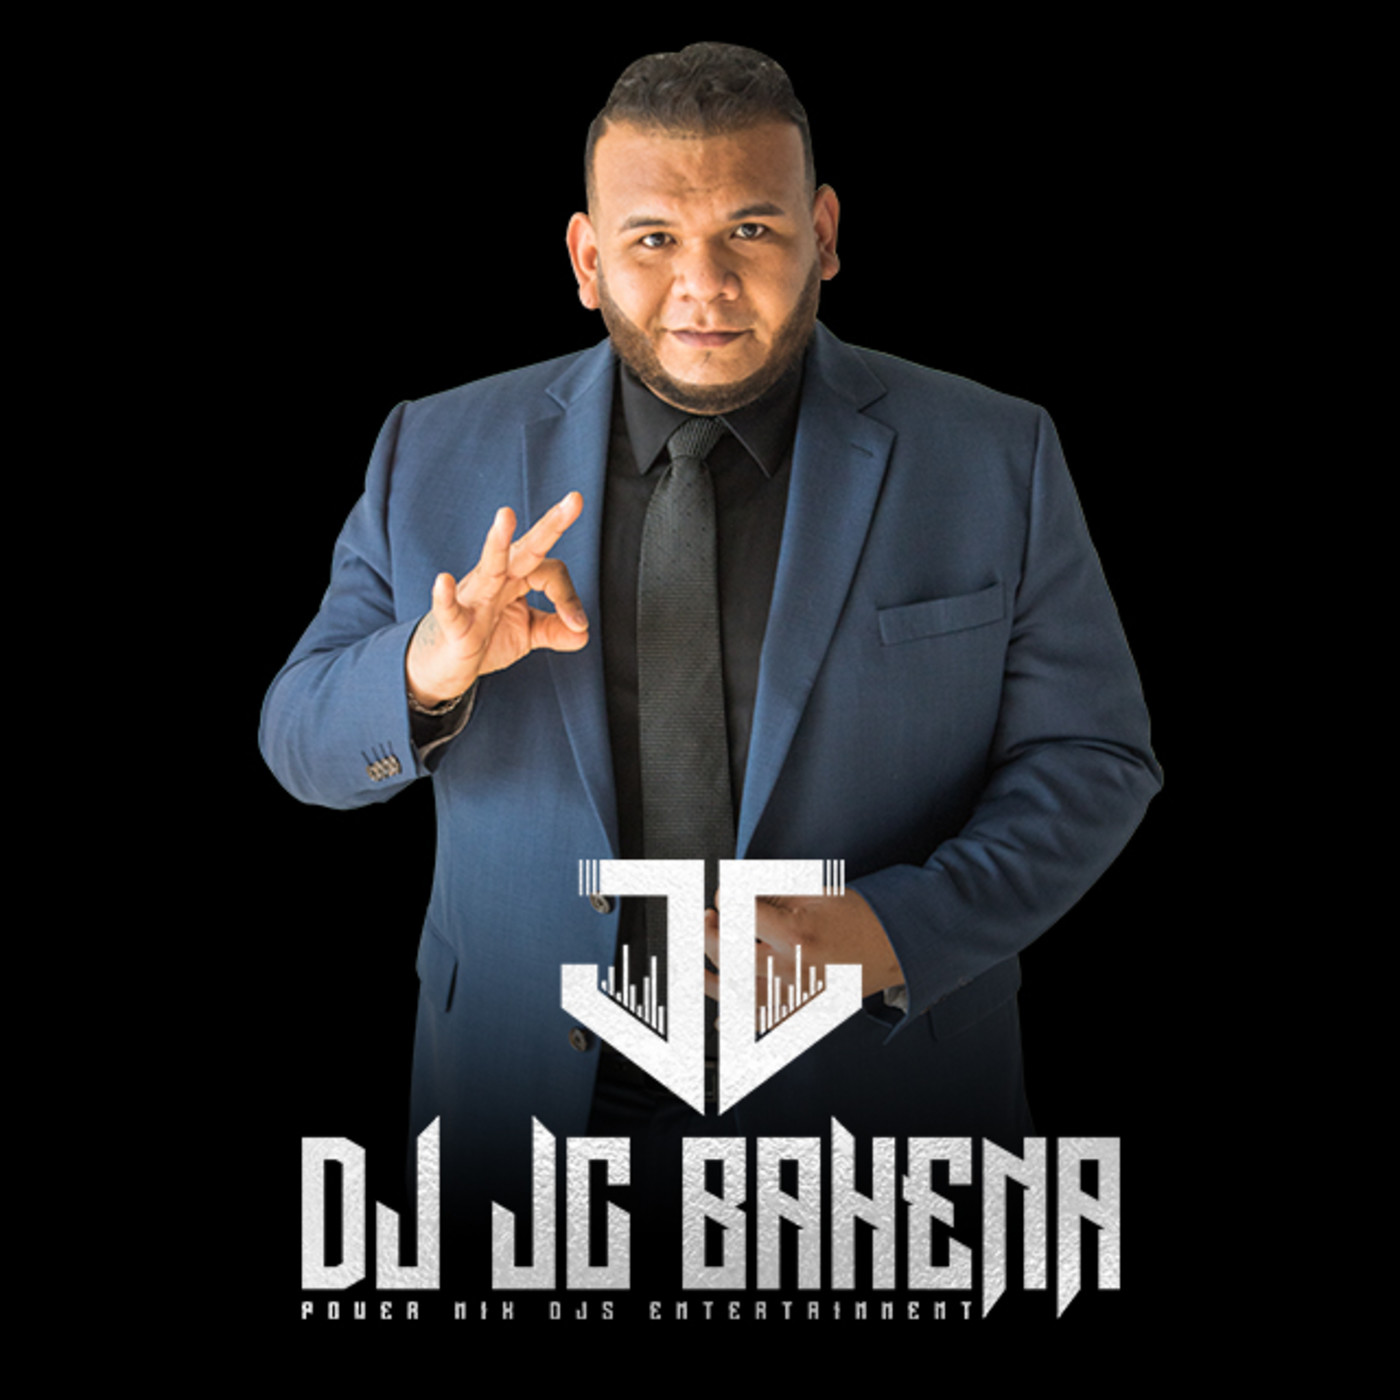 Salsa Mix 2020 Vol.1 - DJ JC bahena